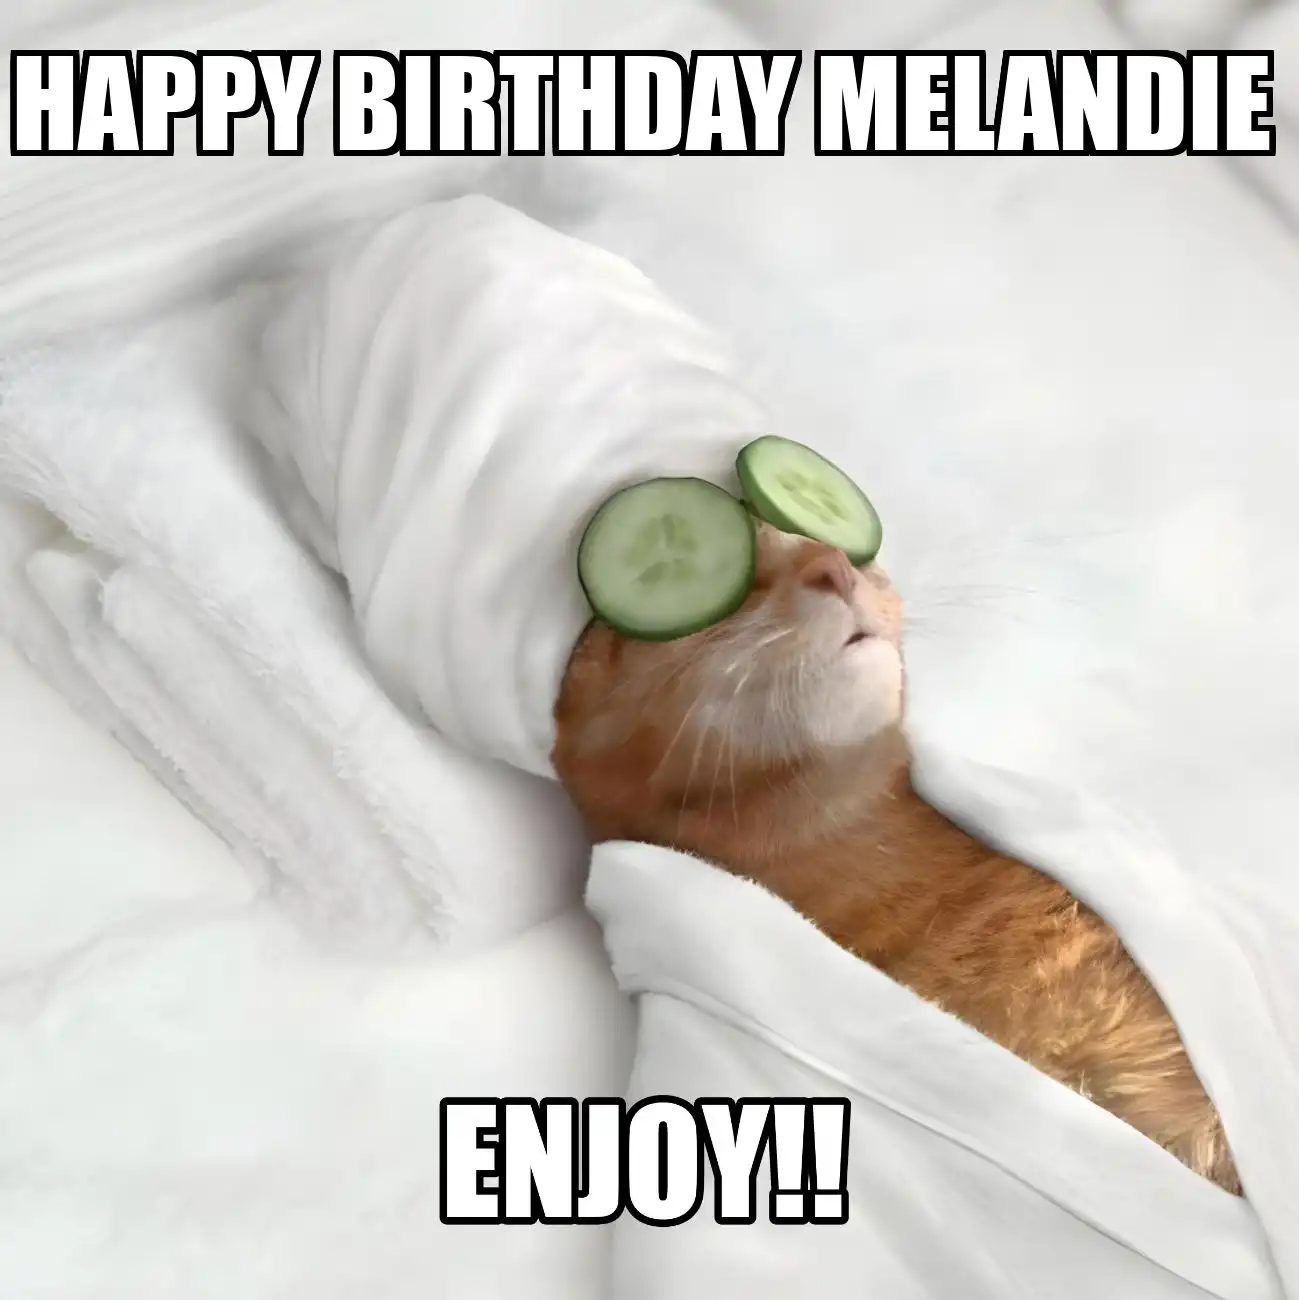 Happy Birthday Melandie Enjoy Cat Meme